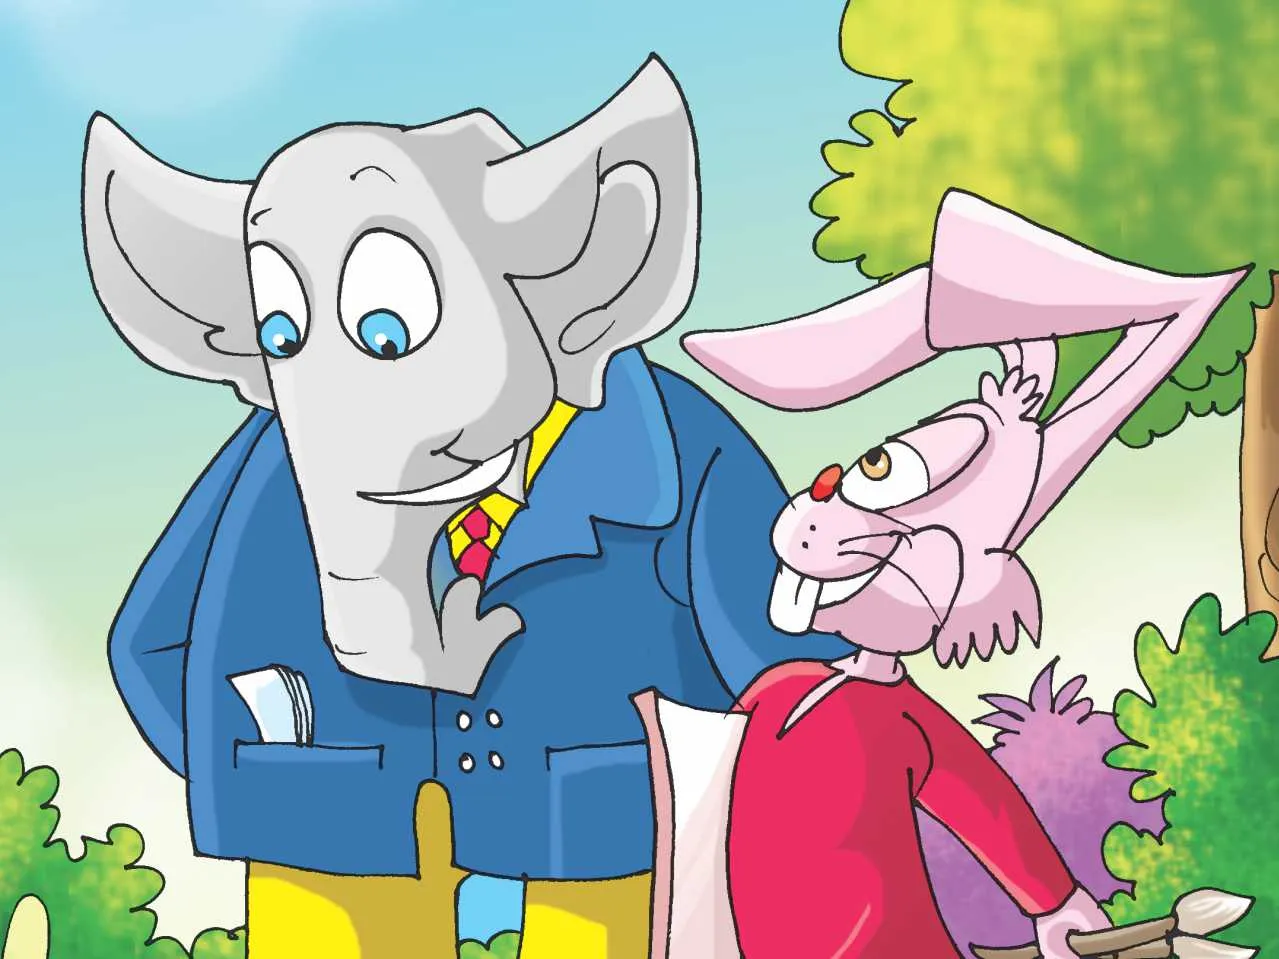 Elephant and rabbit jungle story